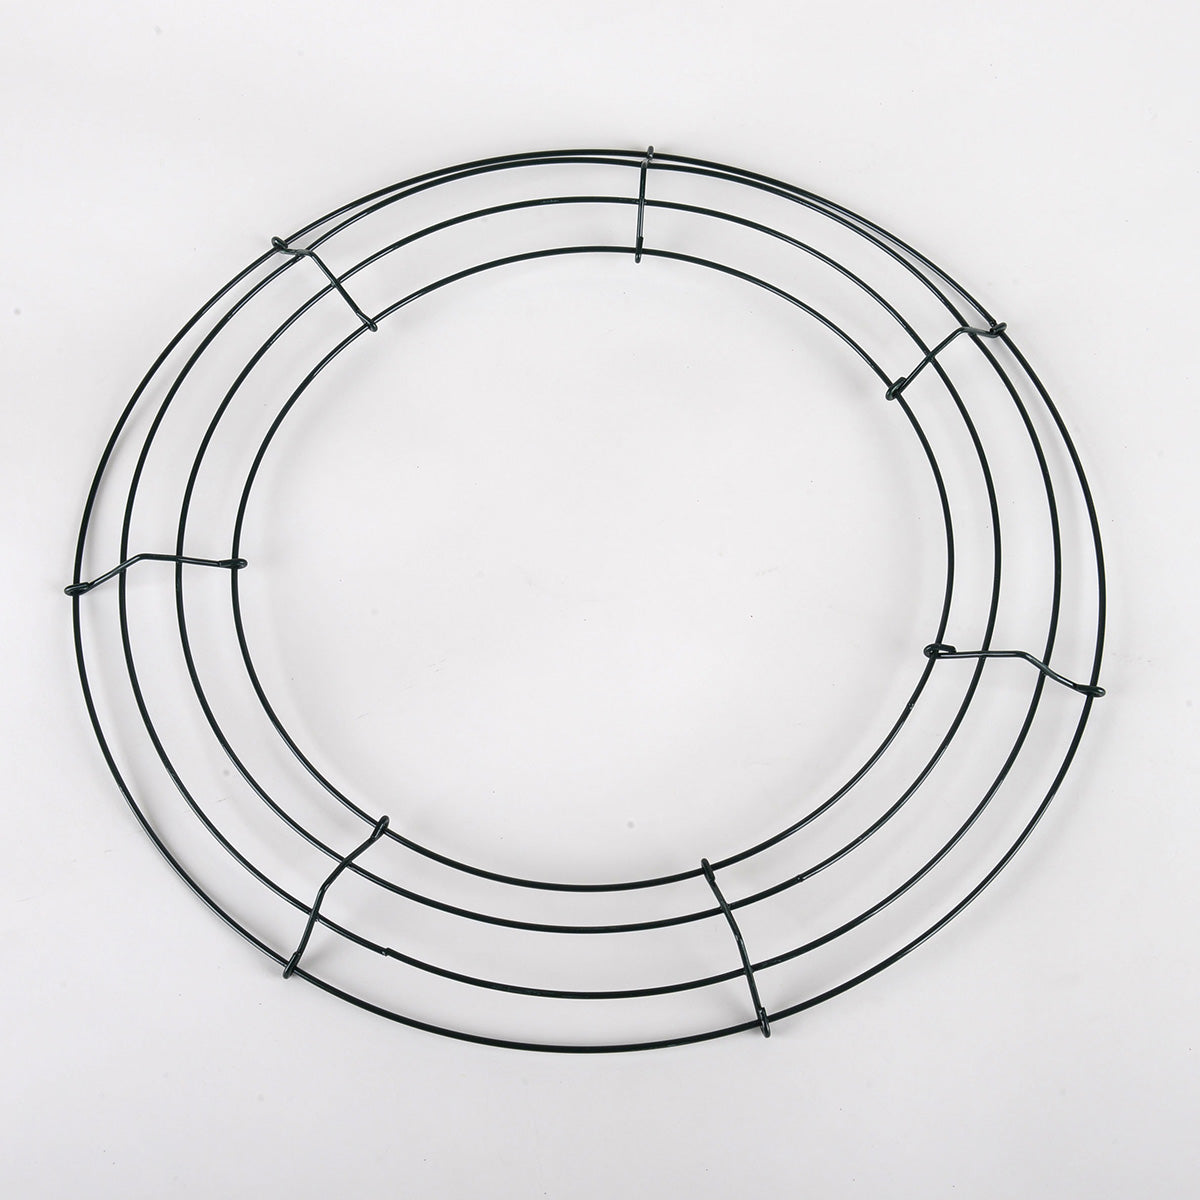 16 Inch Wreath Wire Frames - Bundle of 10pcs